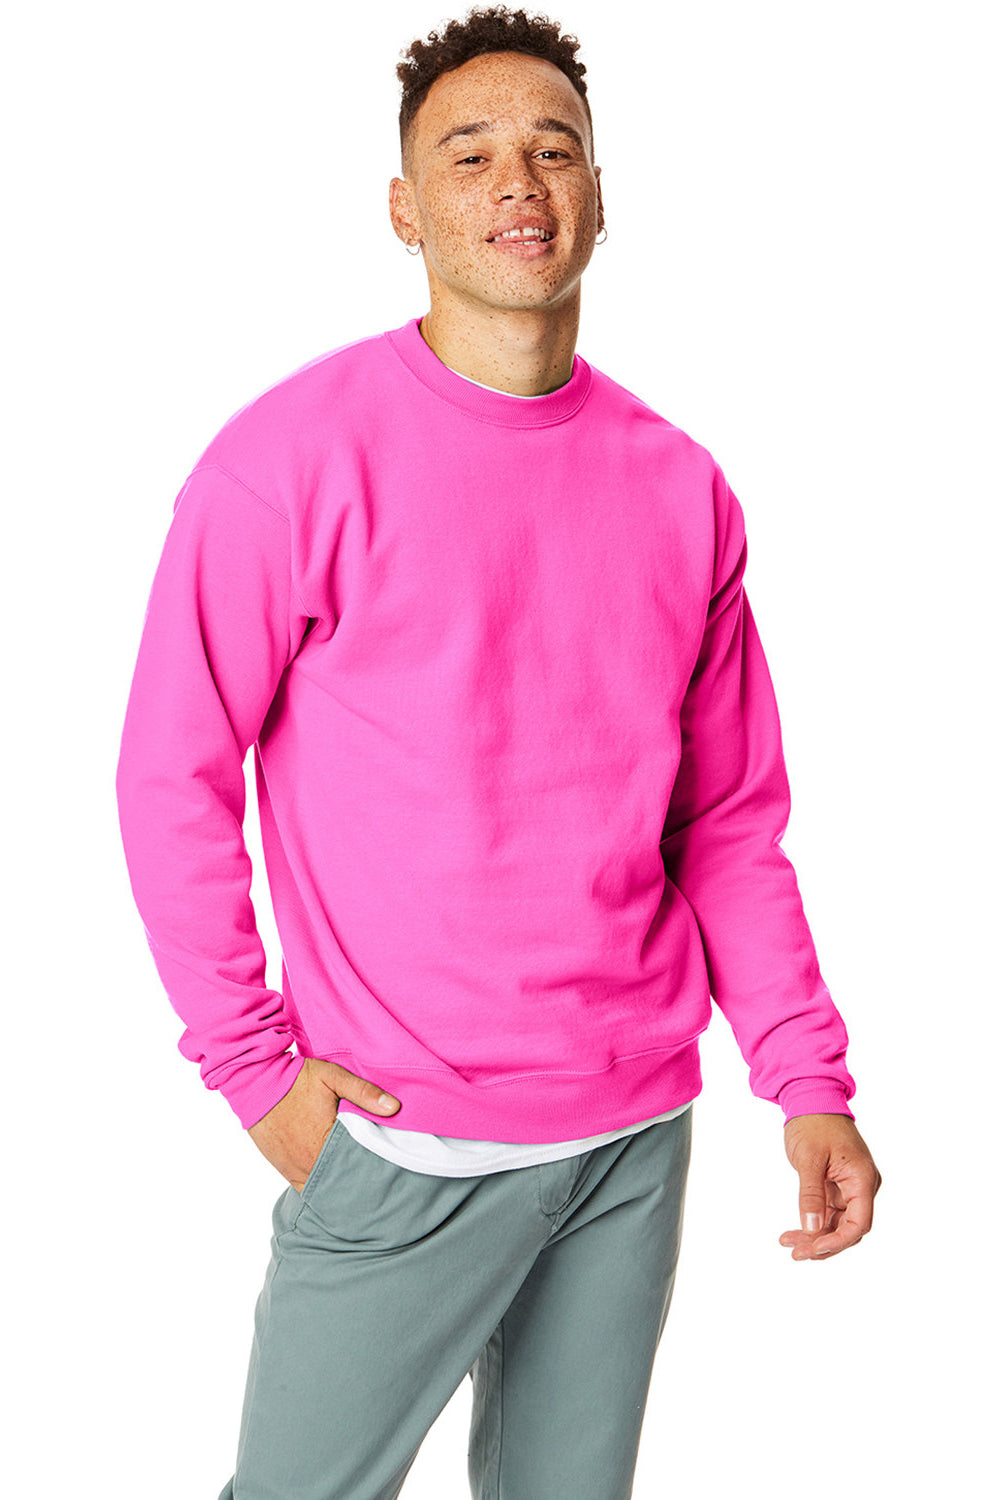 Hanes P160/P1607 Mens EcoSmart Print Pro XP Fleece Crewneck Sweatshirt Safety Pink Front